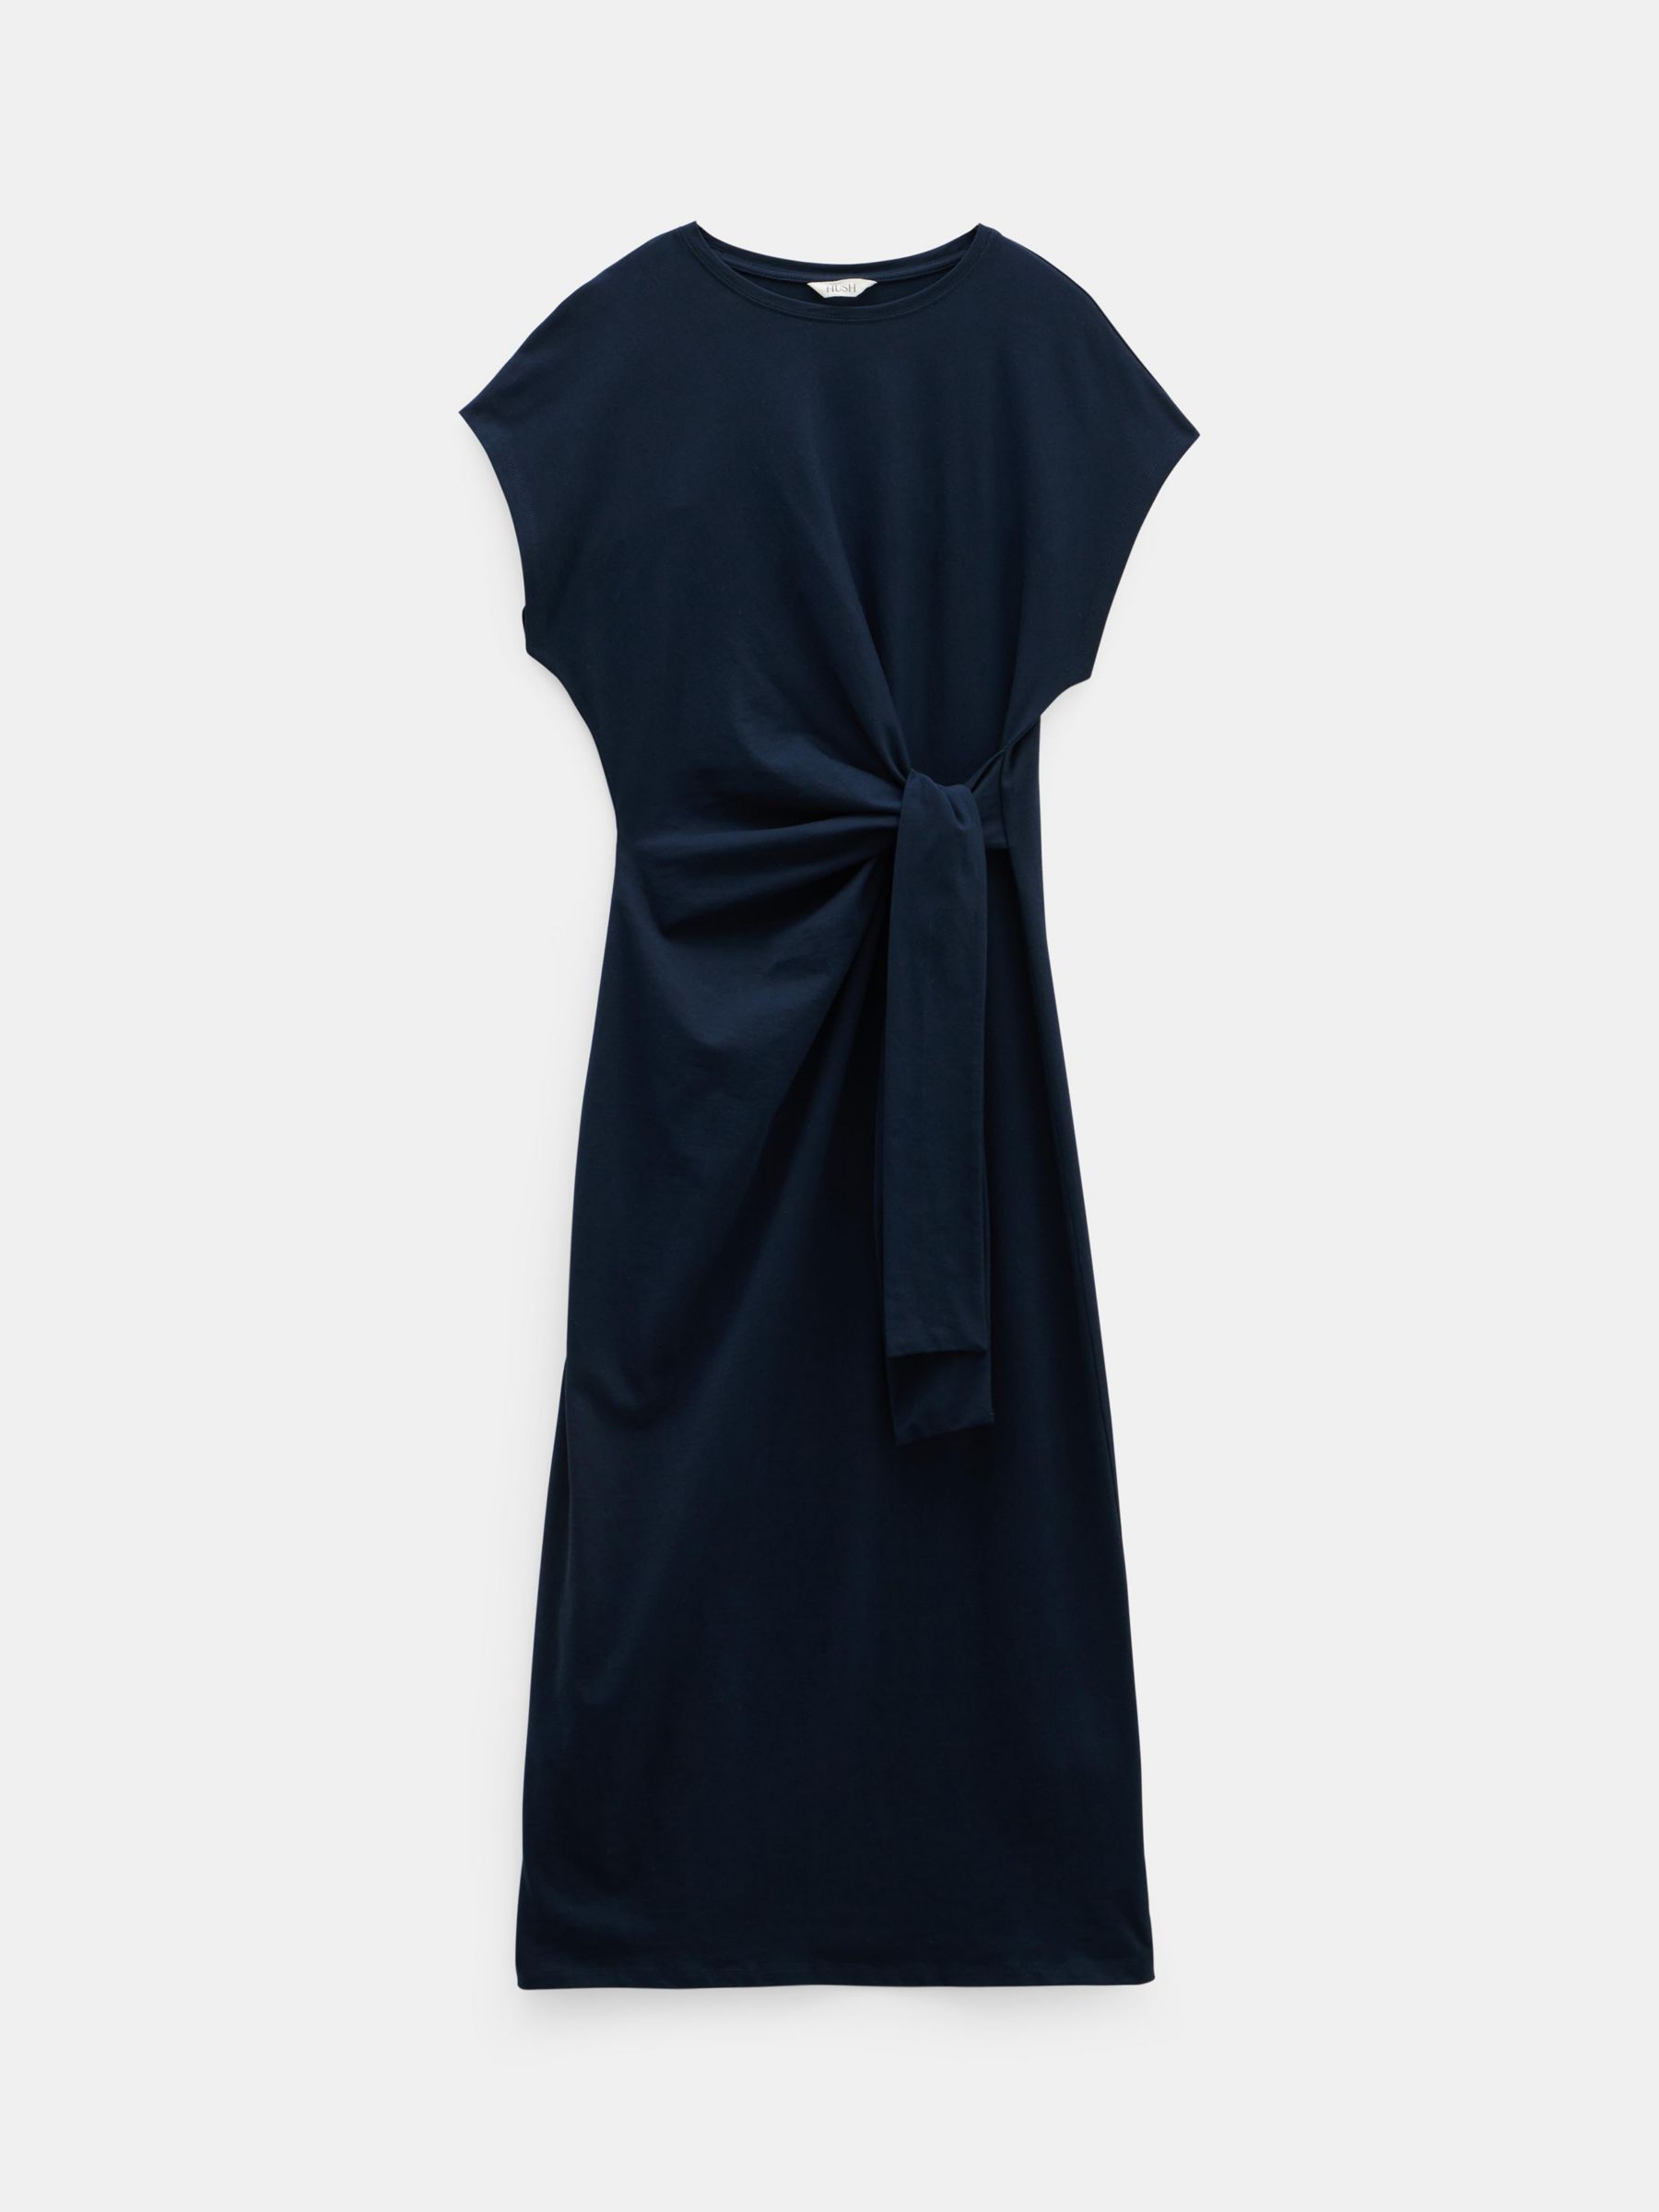 HUSH Trinny Midi Cotton Jersey Dress, Midnight Navy, 4